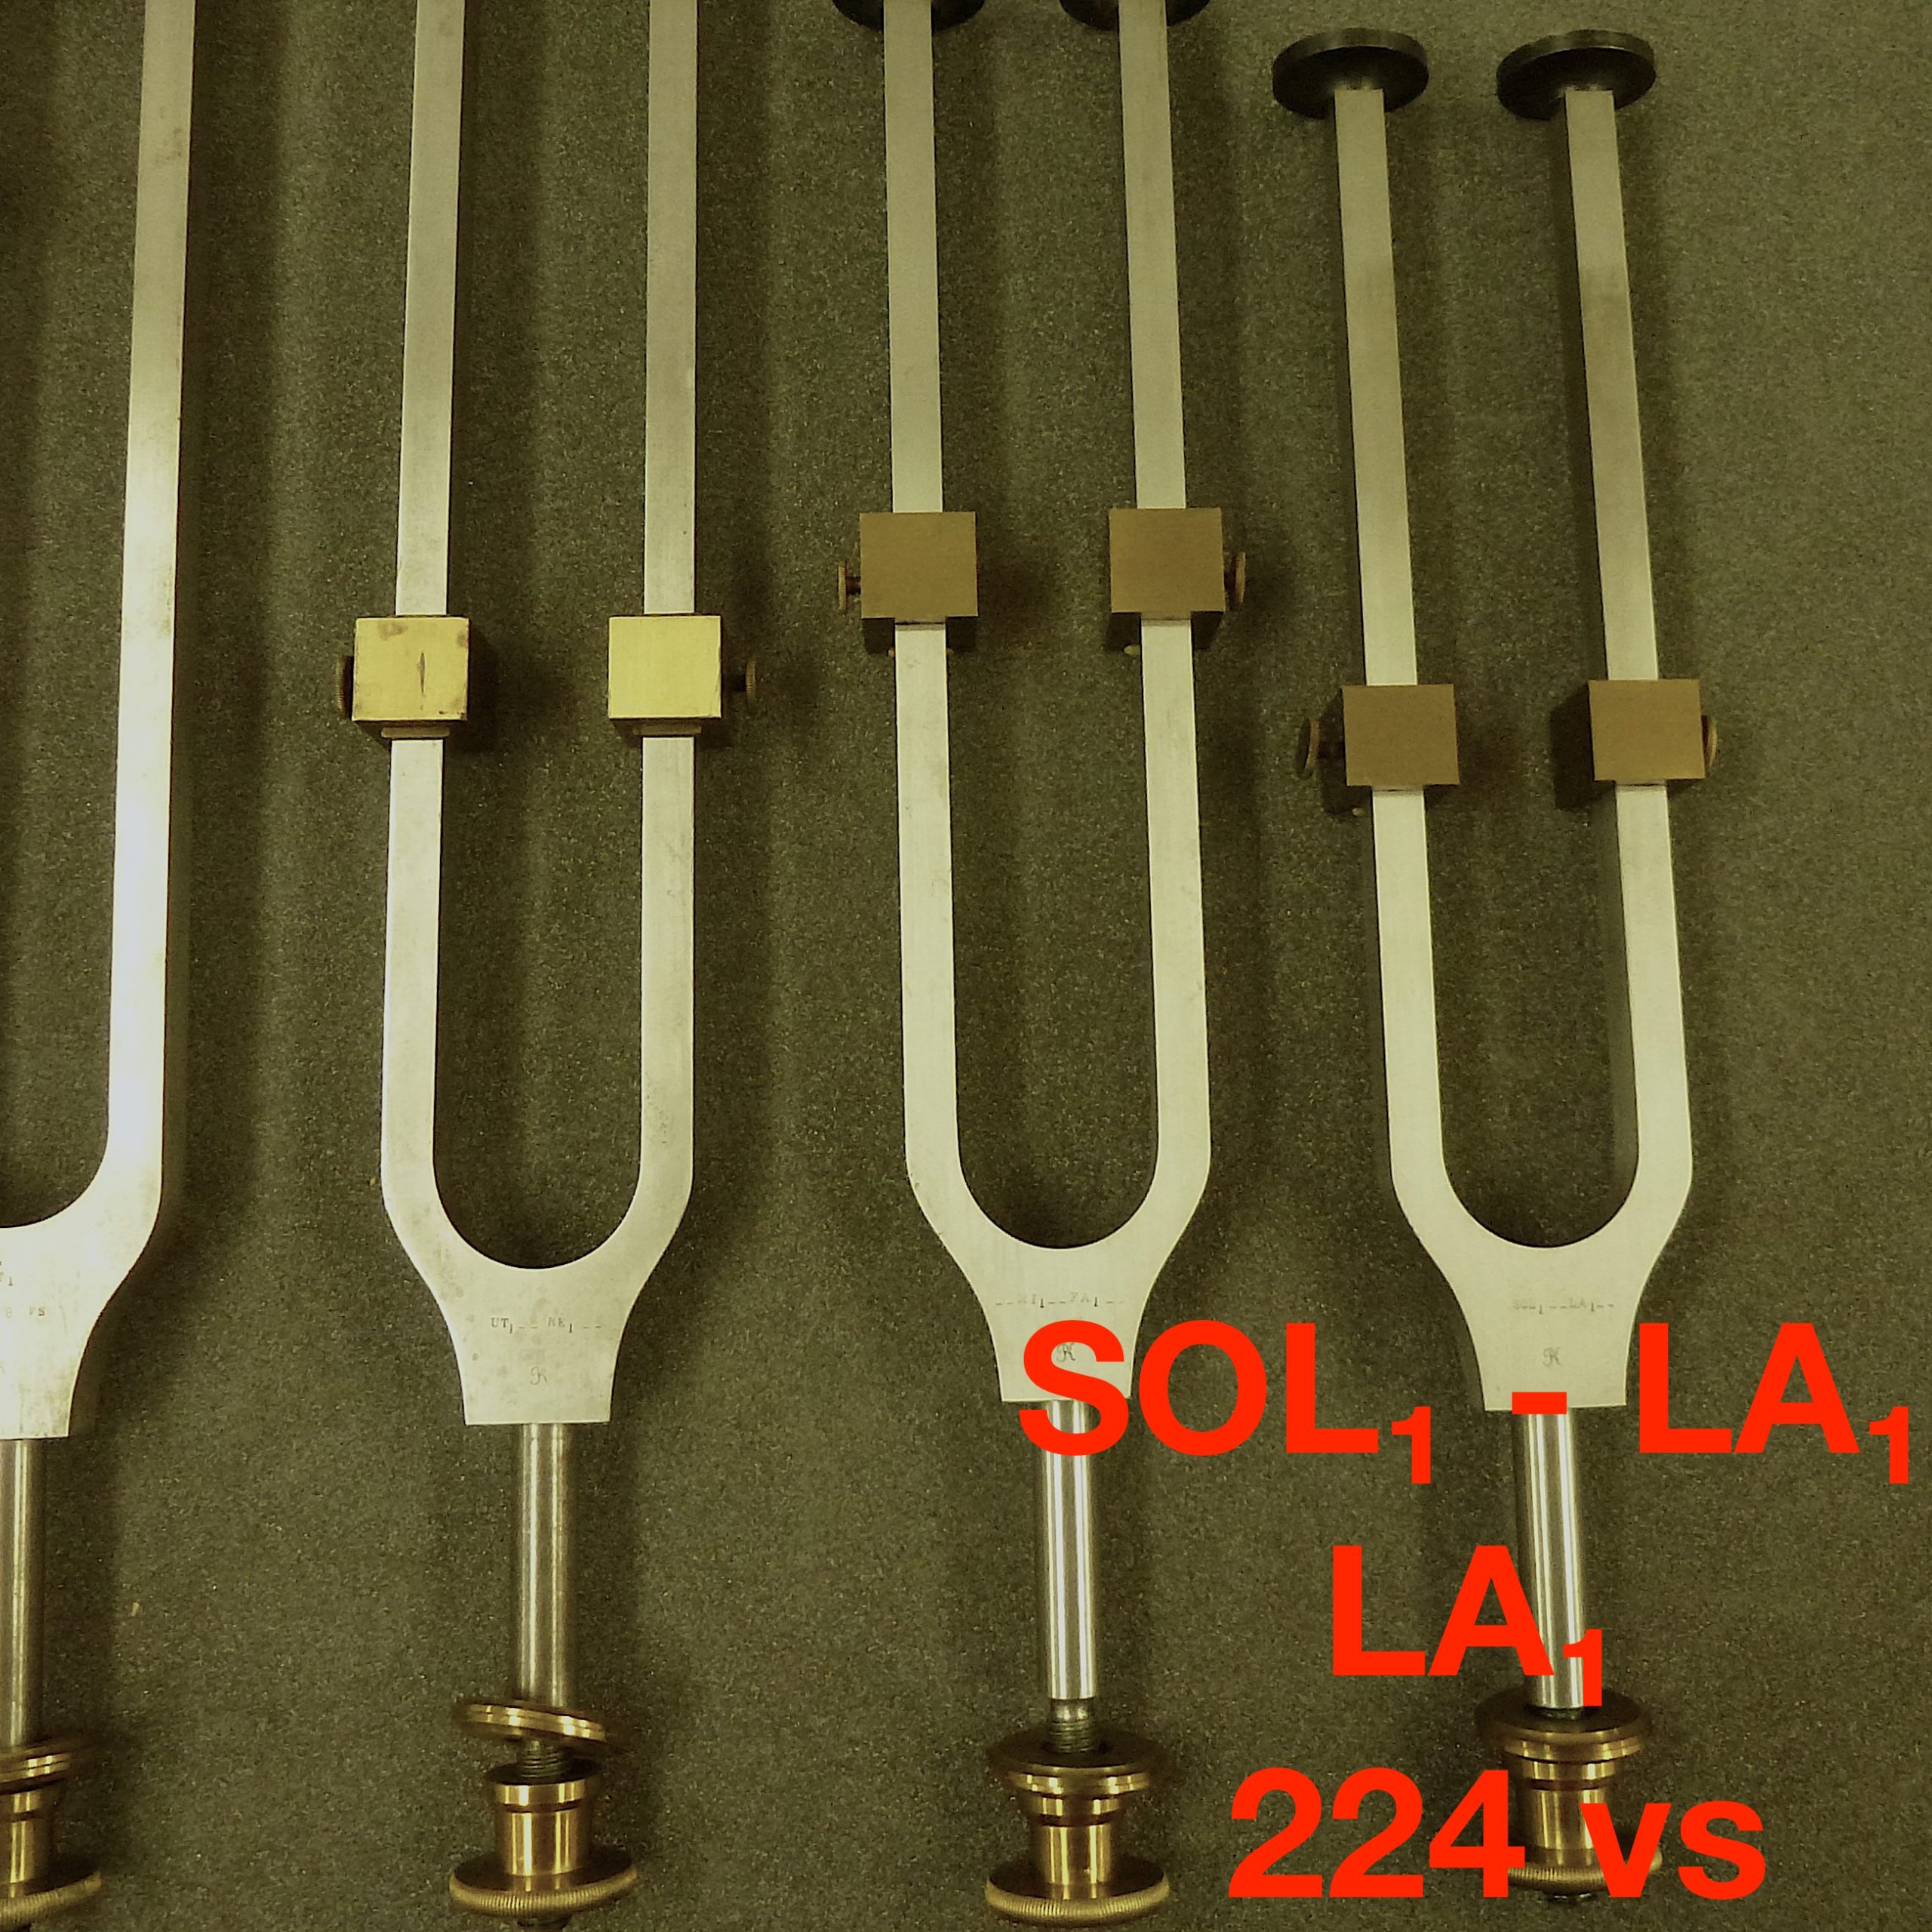 Tuning fork by Dr. R. König: SOL₁ - LA₁: LA₁ 224 vs